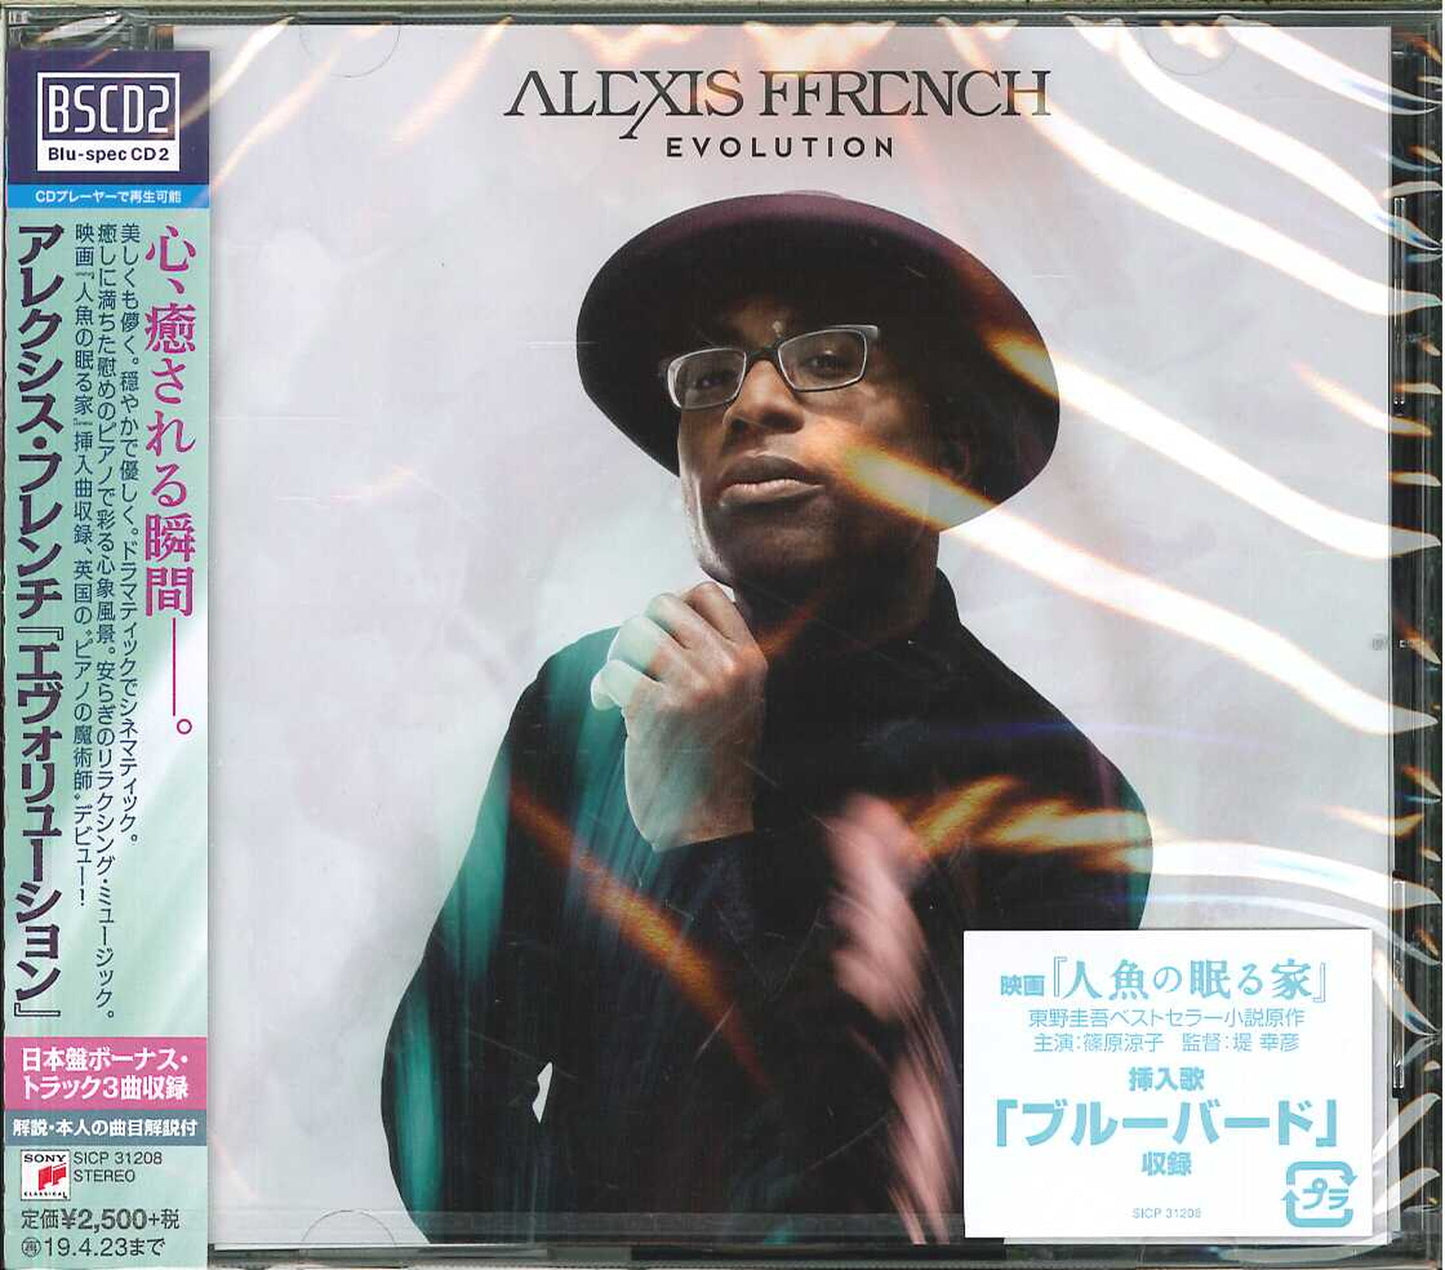 Alexis Ffrench - Evolution - Japan  Blu-spec CD2 Bonus Track